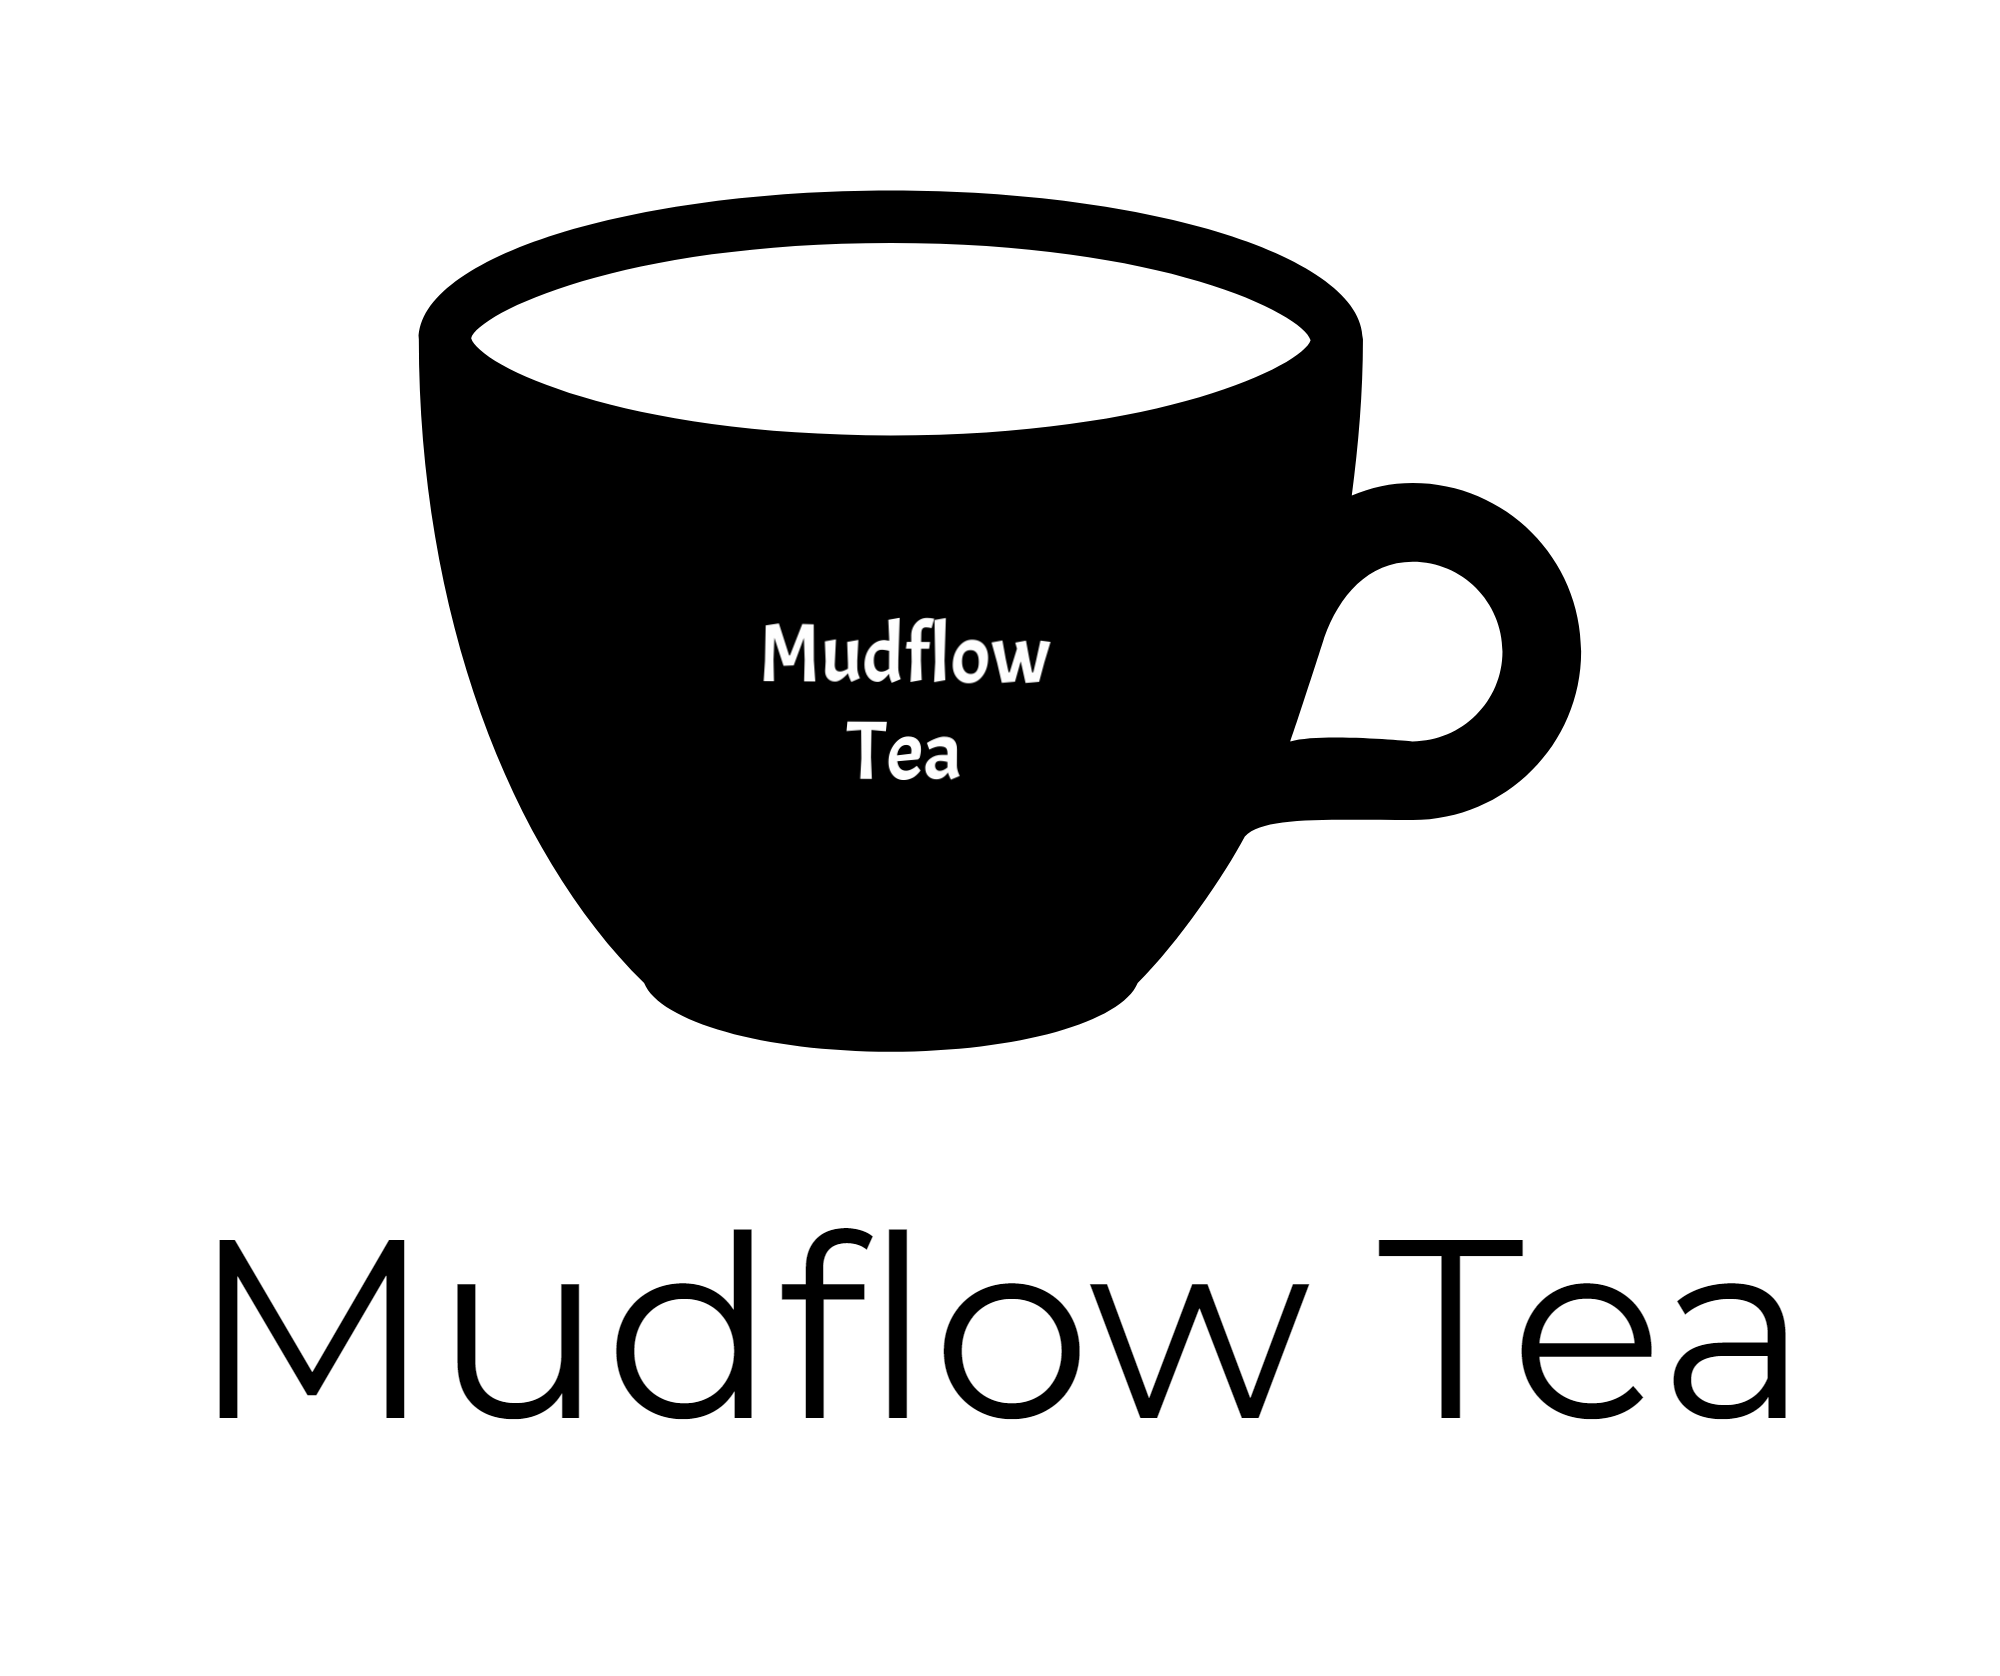 Mudflow